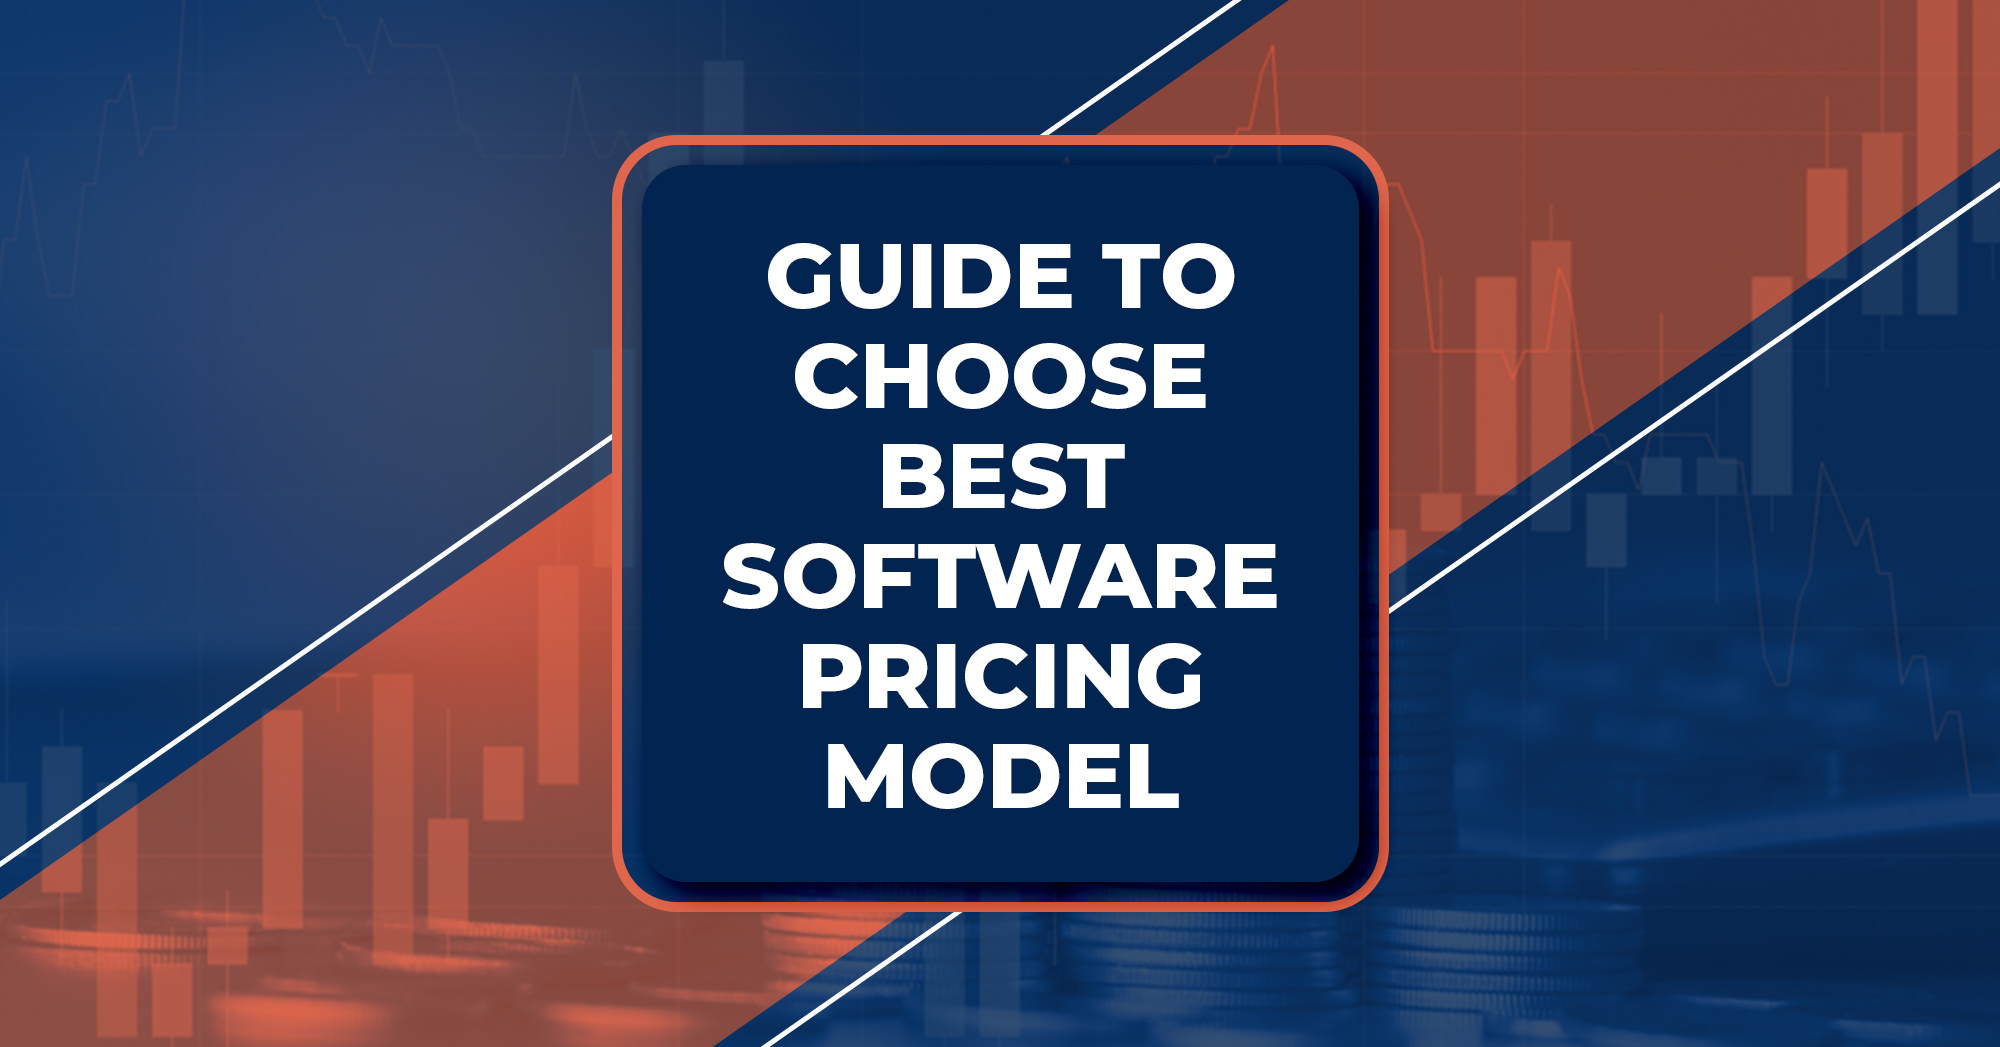 Software pricing models